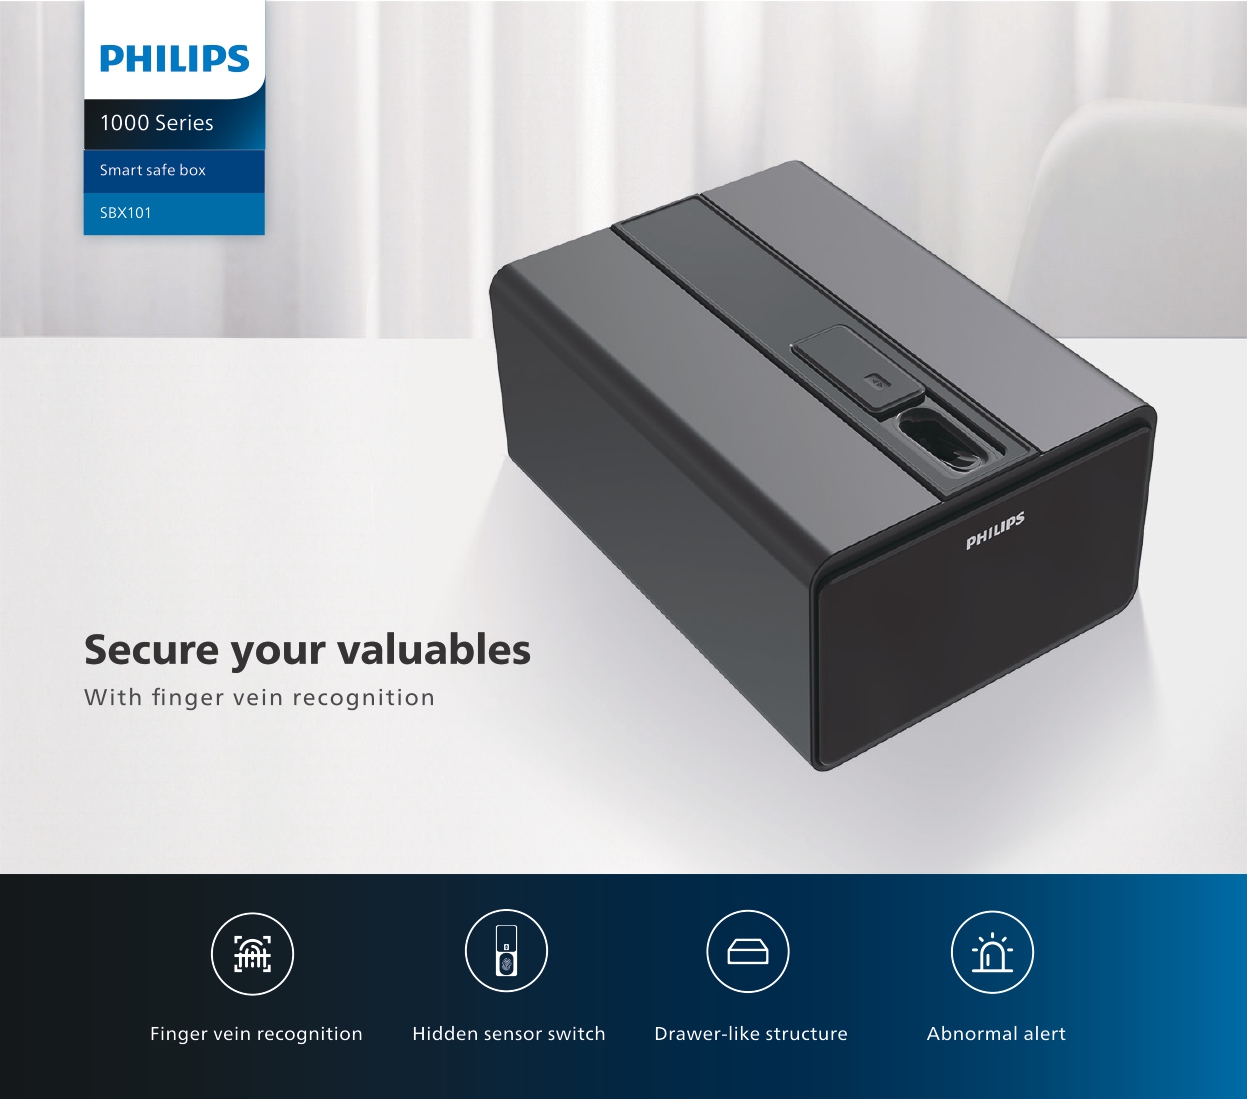 Brochure_Philips Smart Safe Box_EN_20220802 (1)_pages-to-jpg-0013